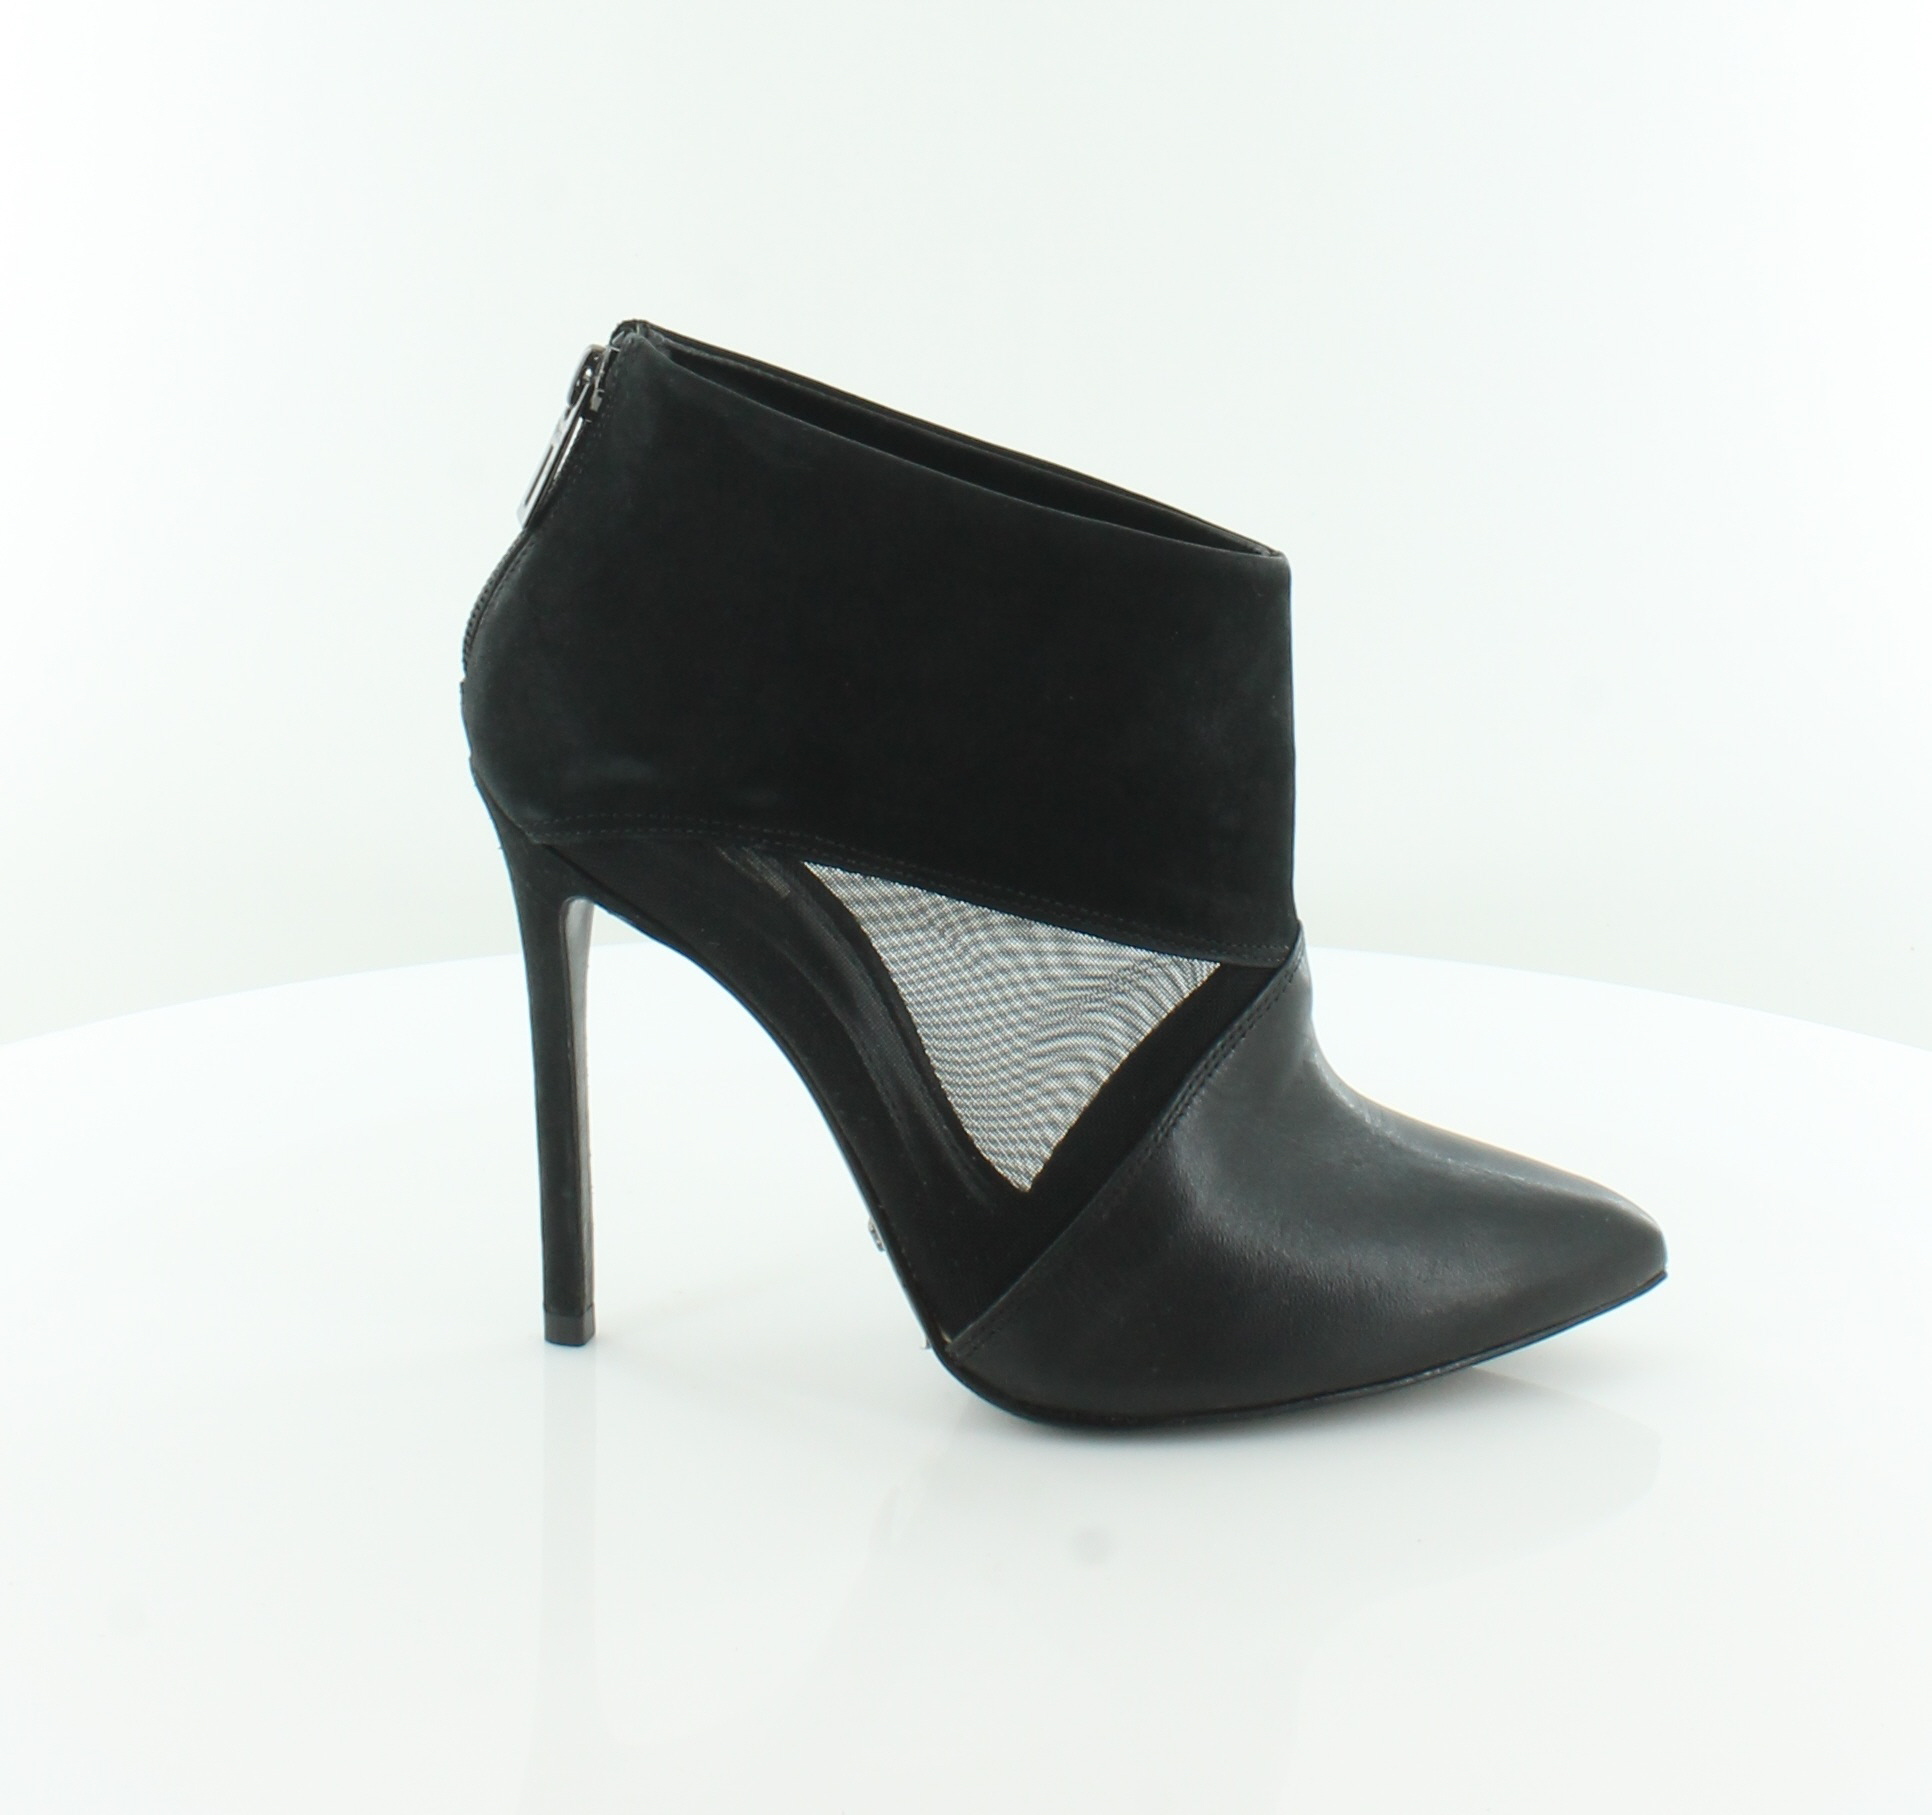 Schutz Pia Black Womens Shoes Size 8 M Boots MSRP $200 630260677096 | eBay